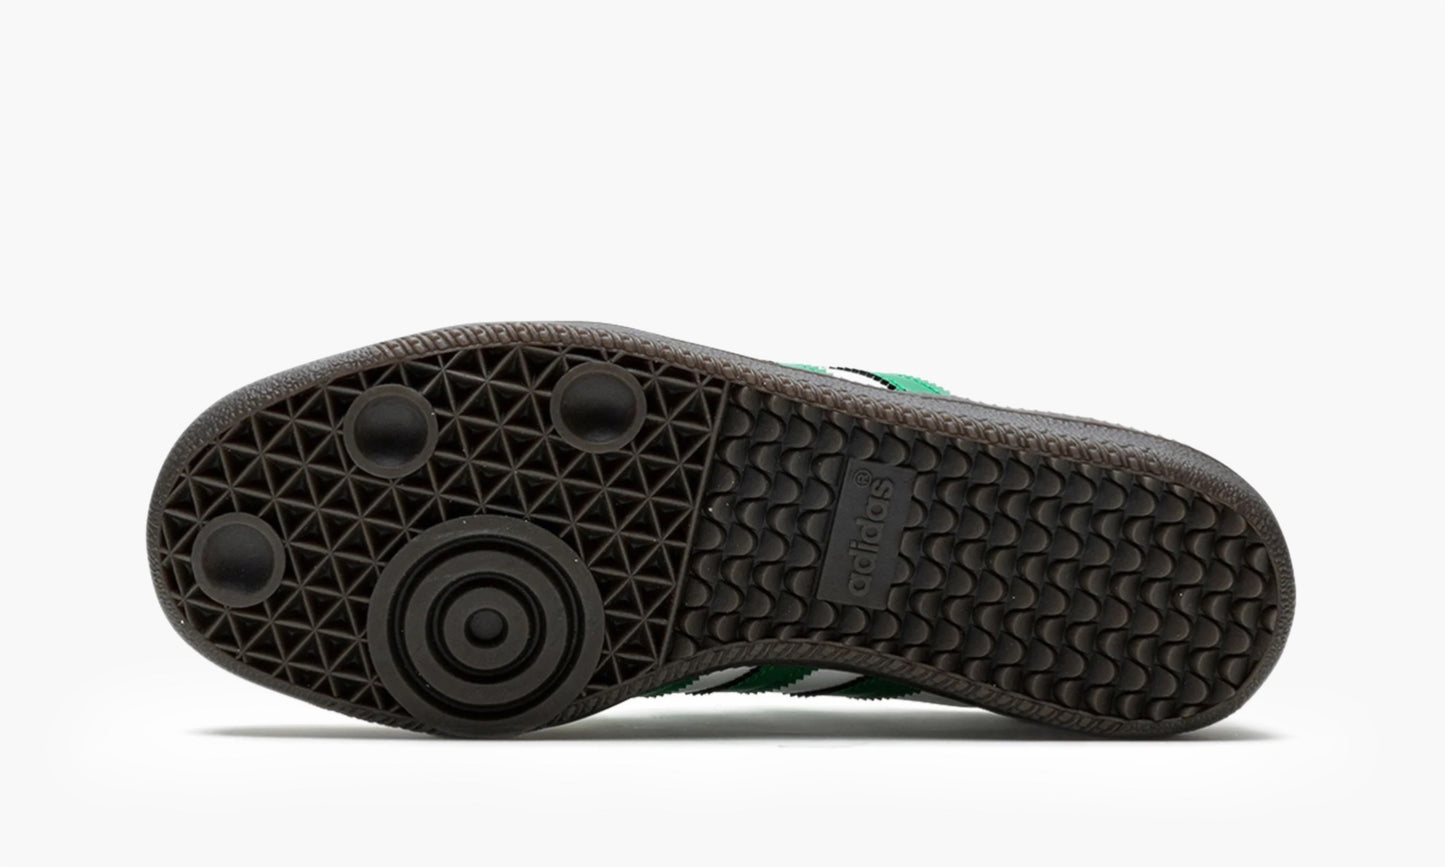 Adidas Samba OG Footwear White Green - IG1024 | The Sortage